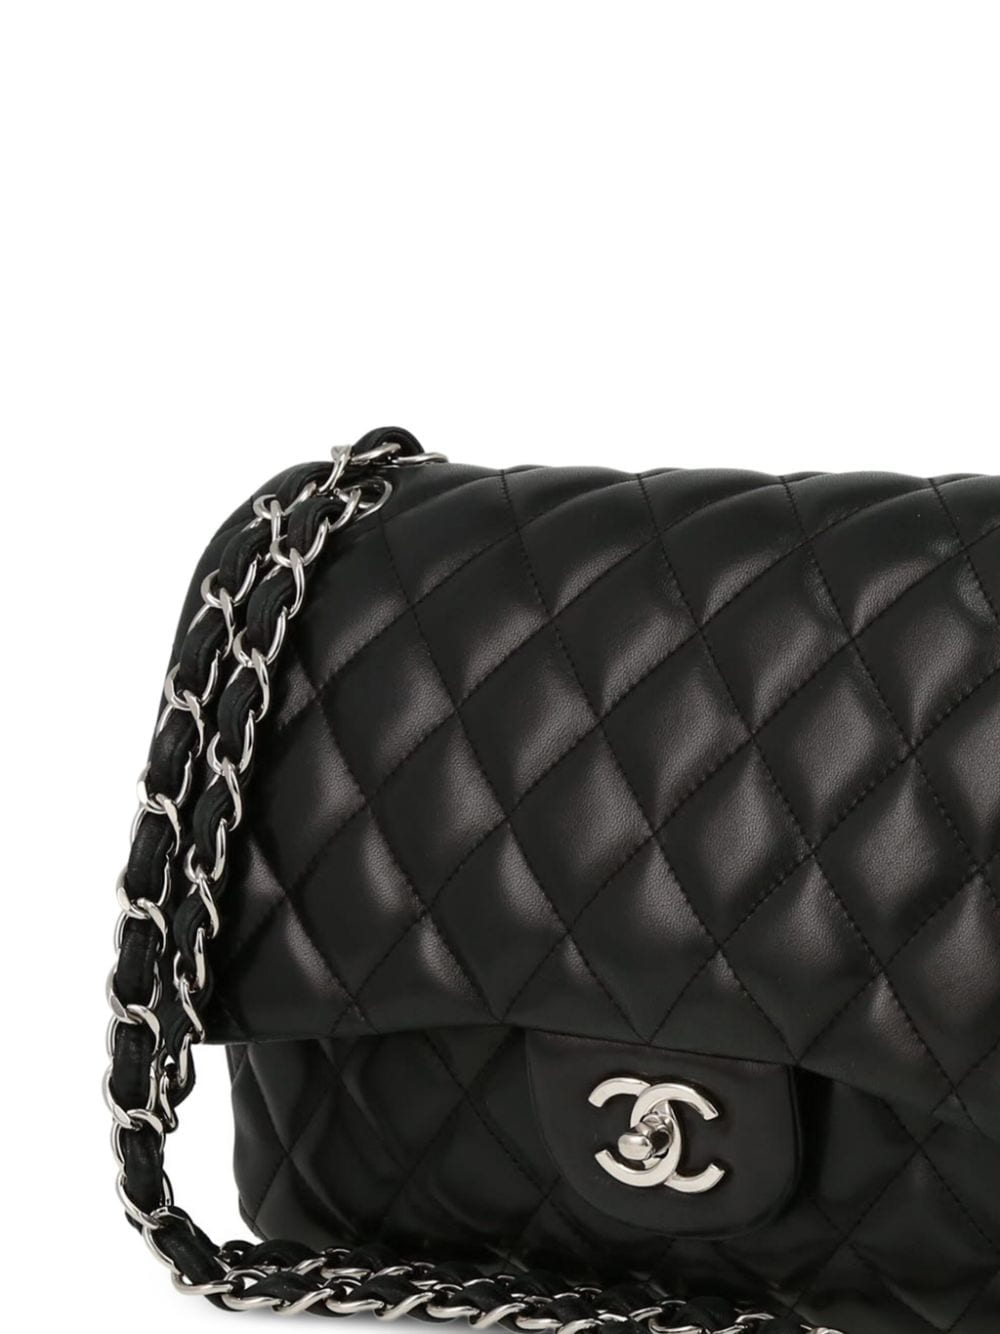 Chanel Double Flap Shoulder Bag Black